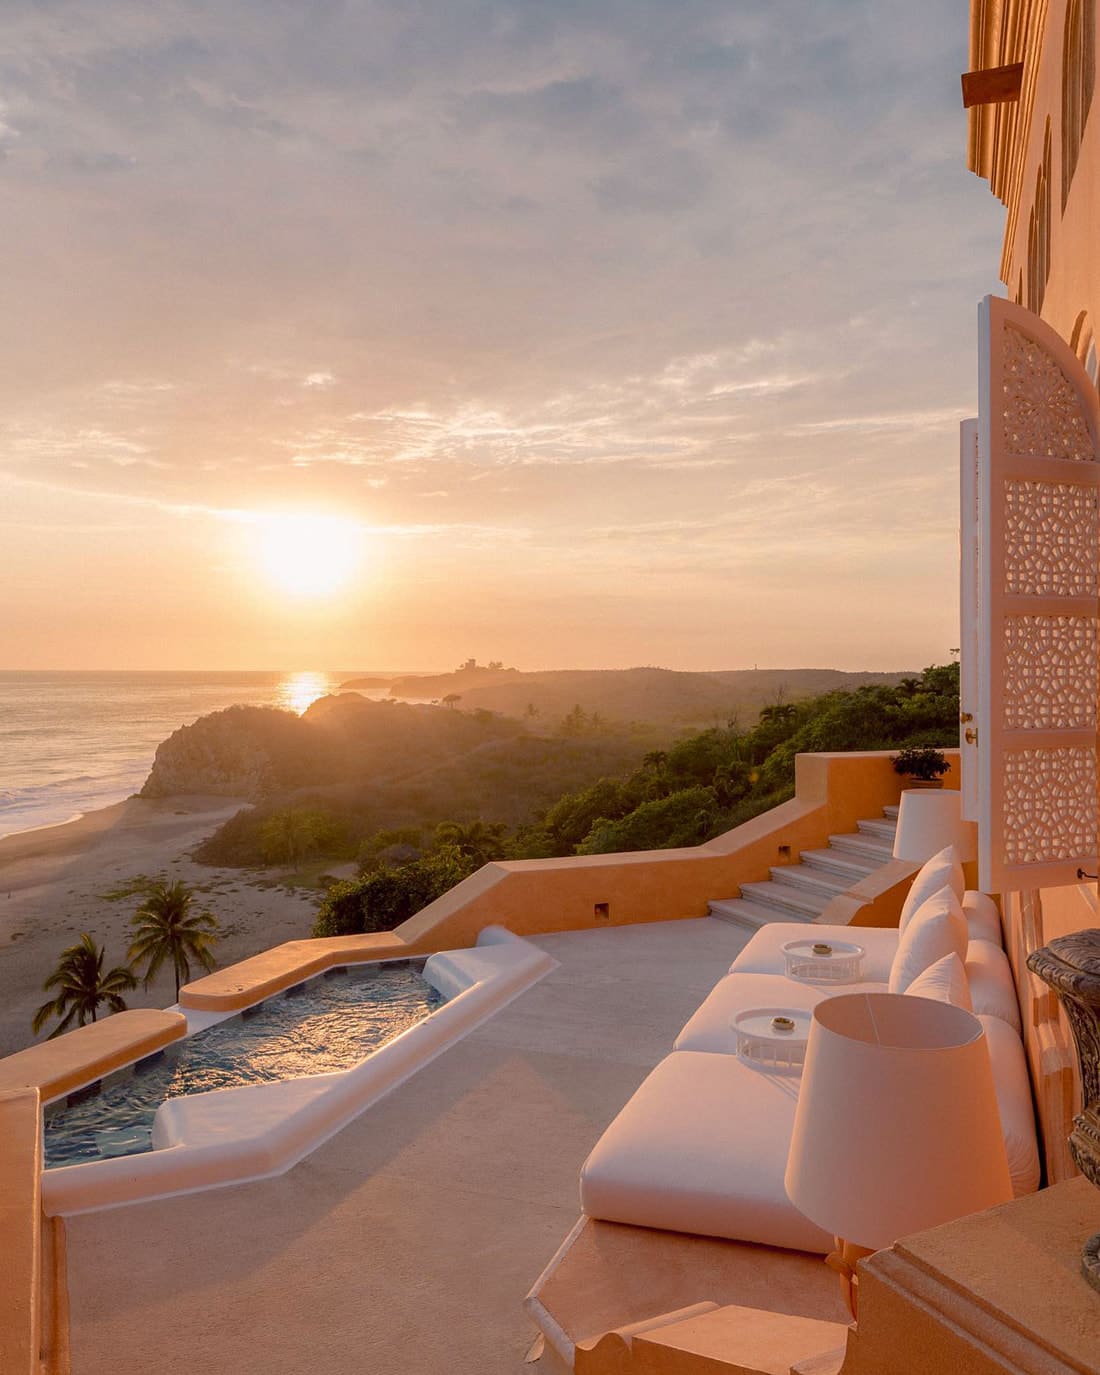 Luxury beach house in Mexico